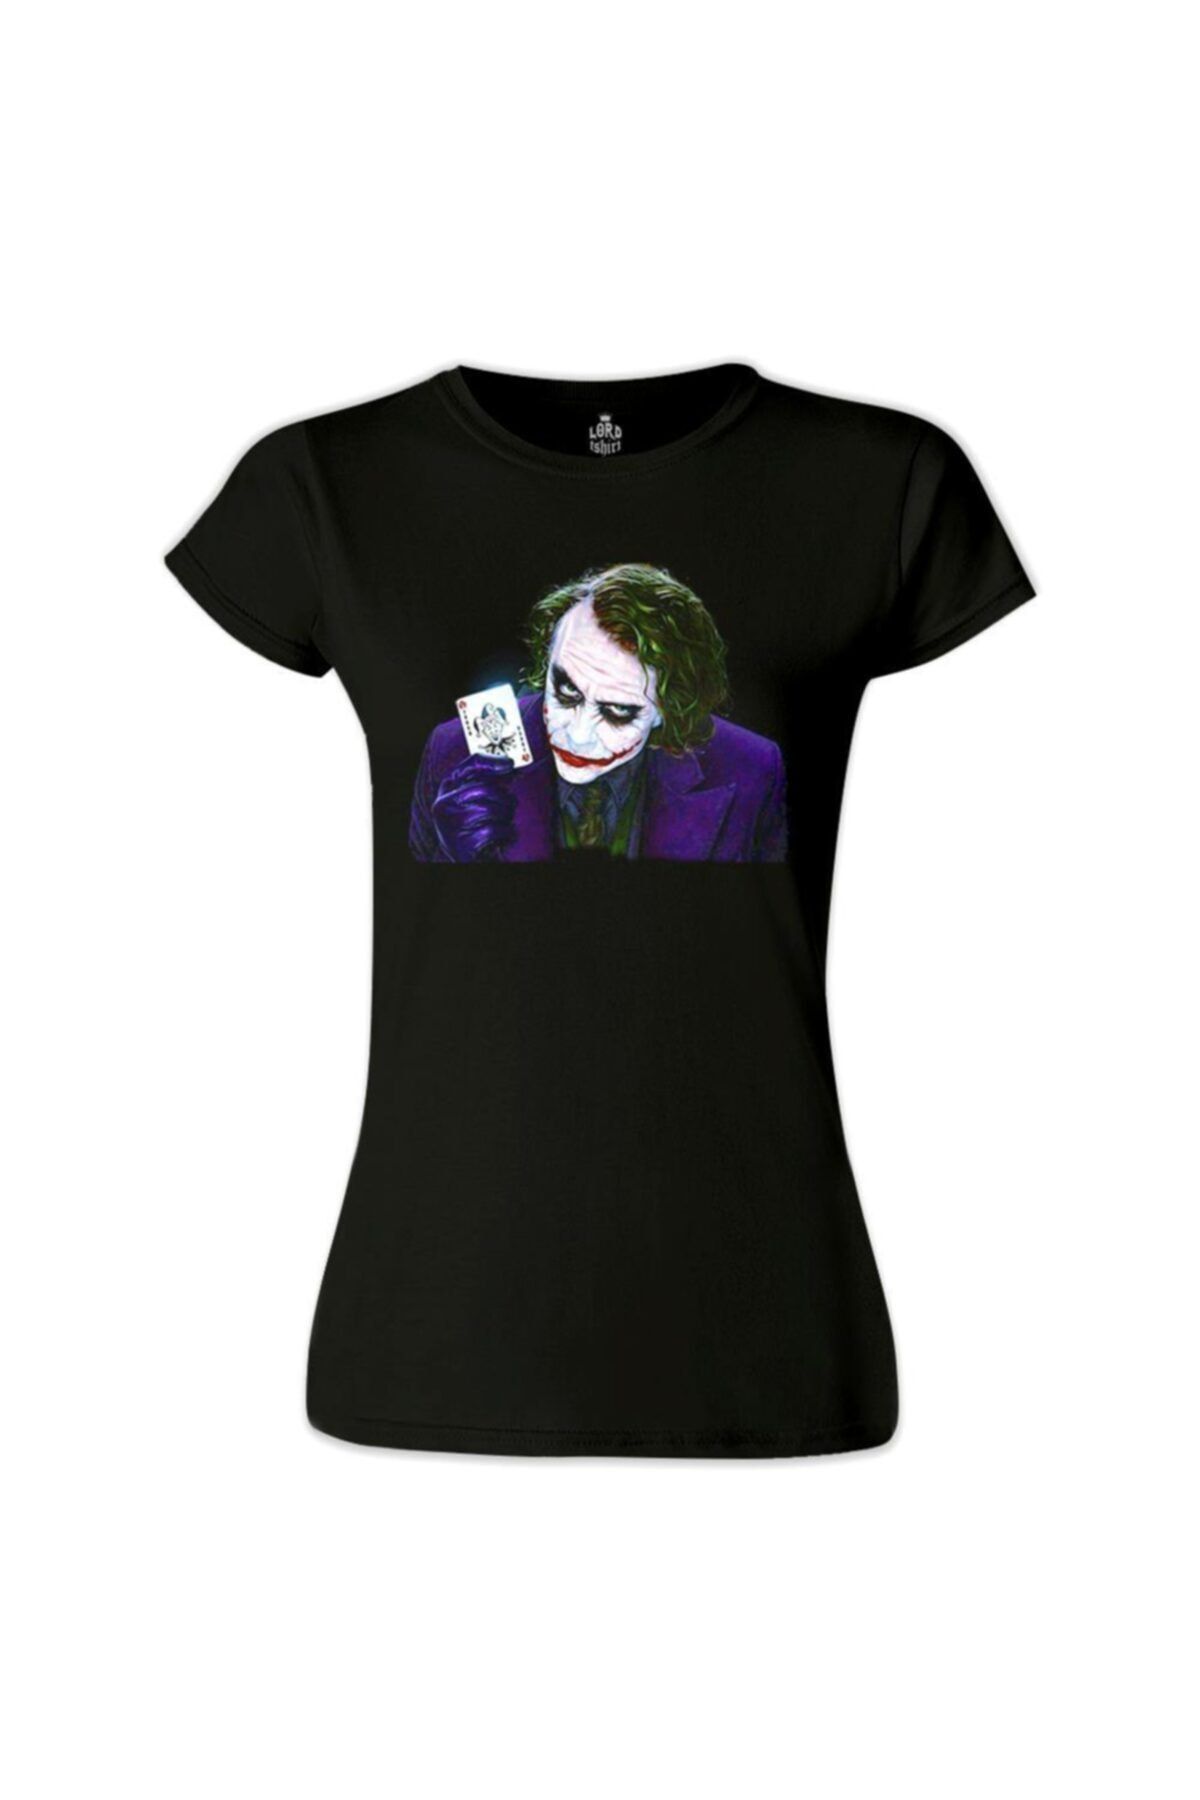 Lord T-Shirt Kadın Siyah Joker As T-shirt BS-1281